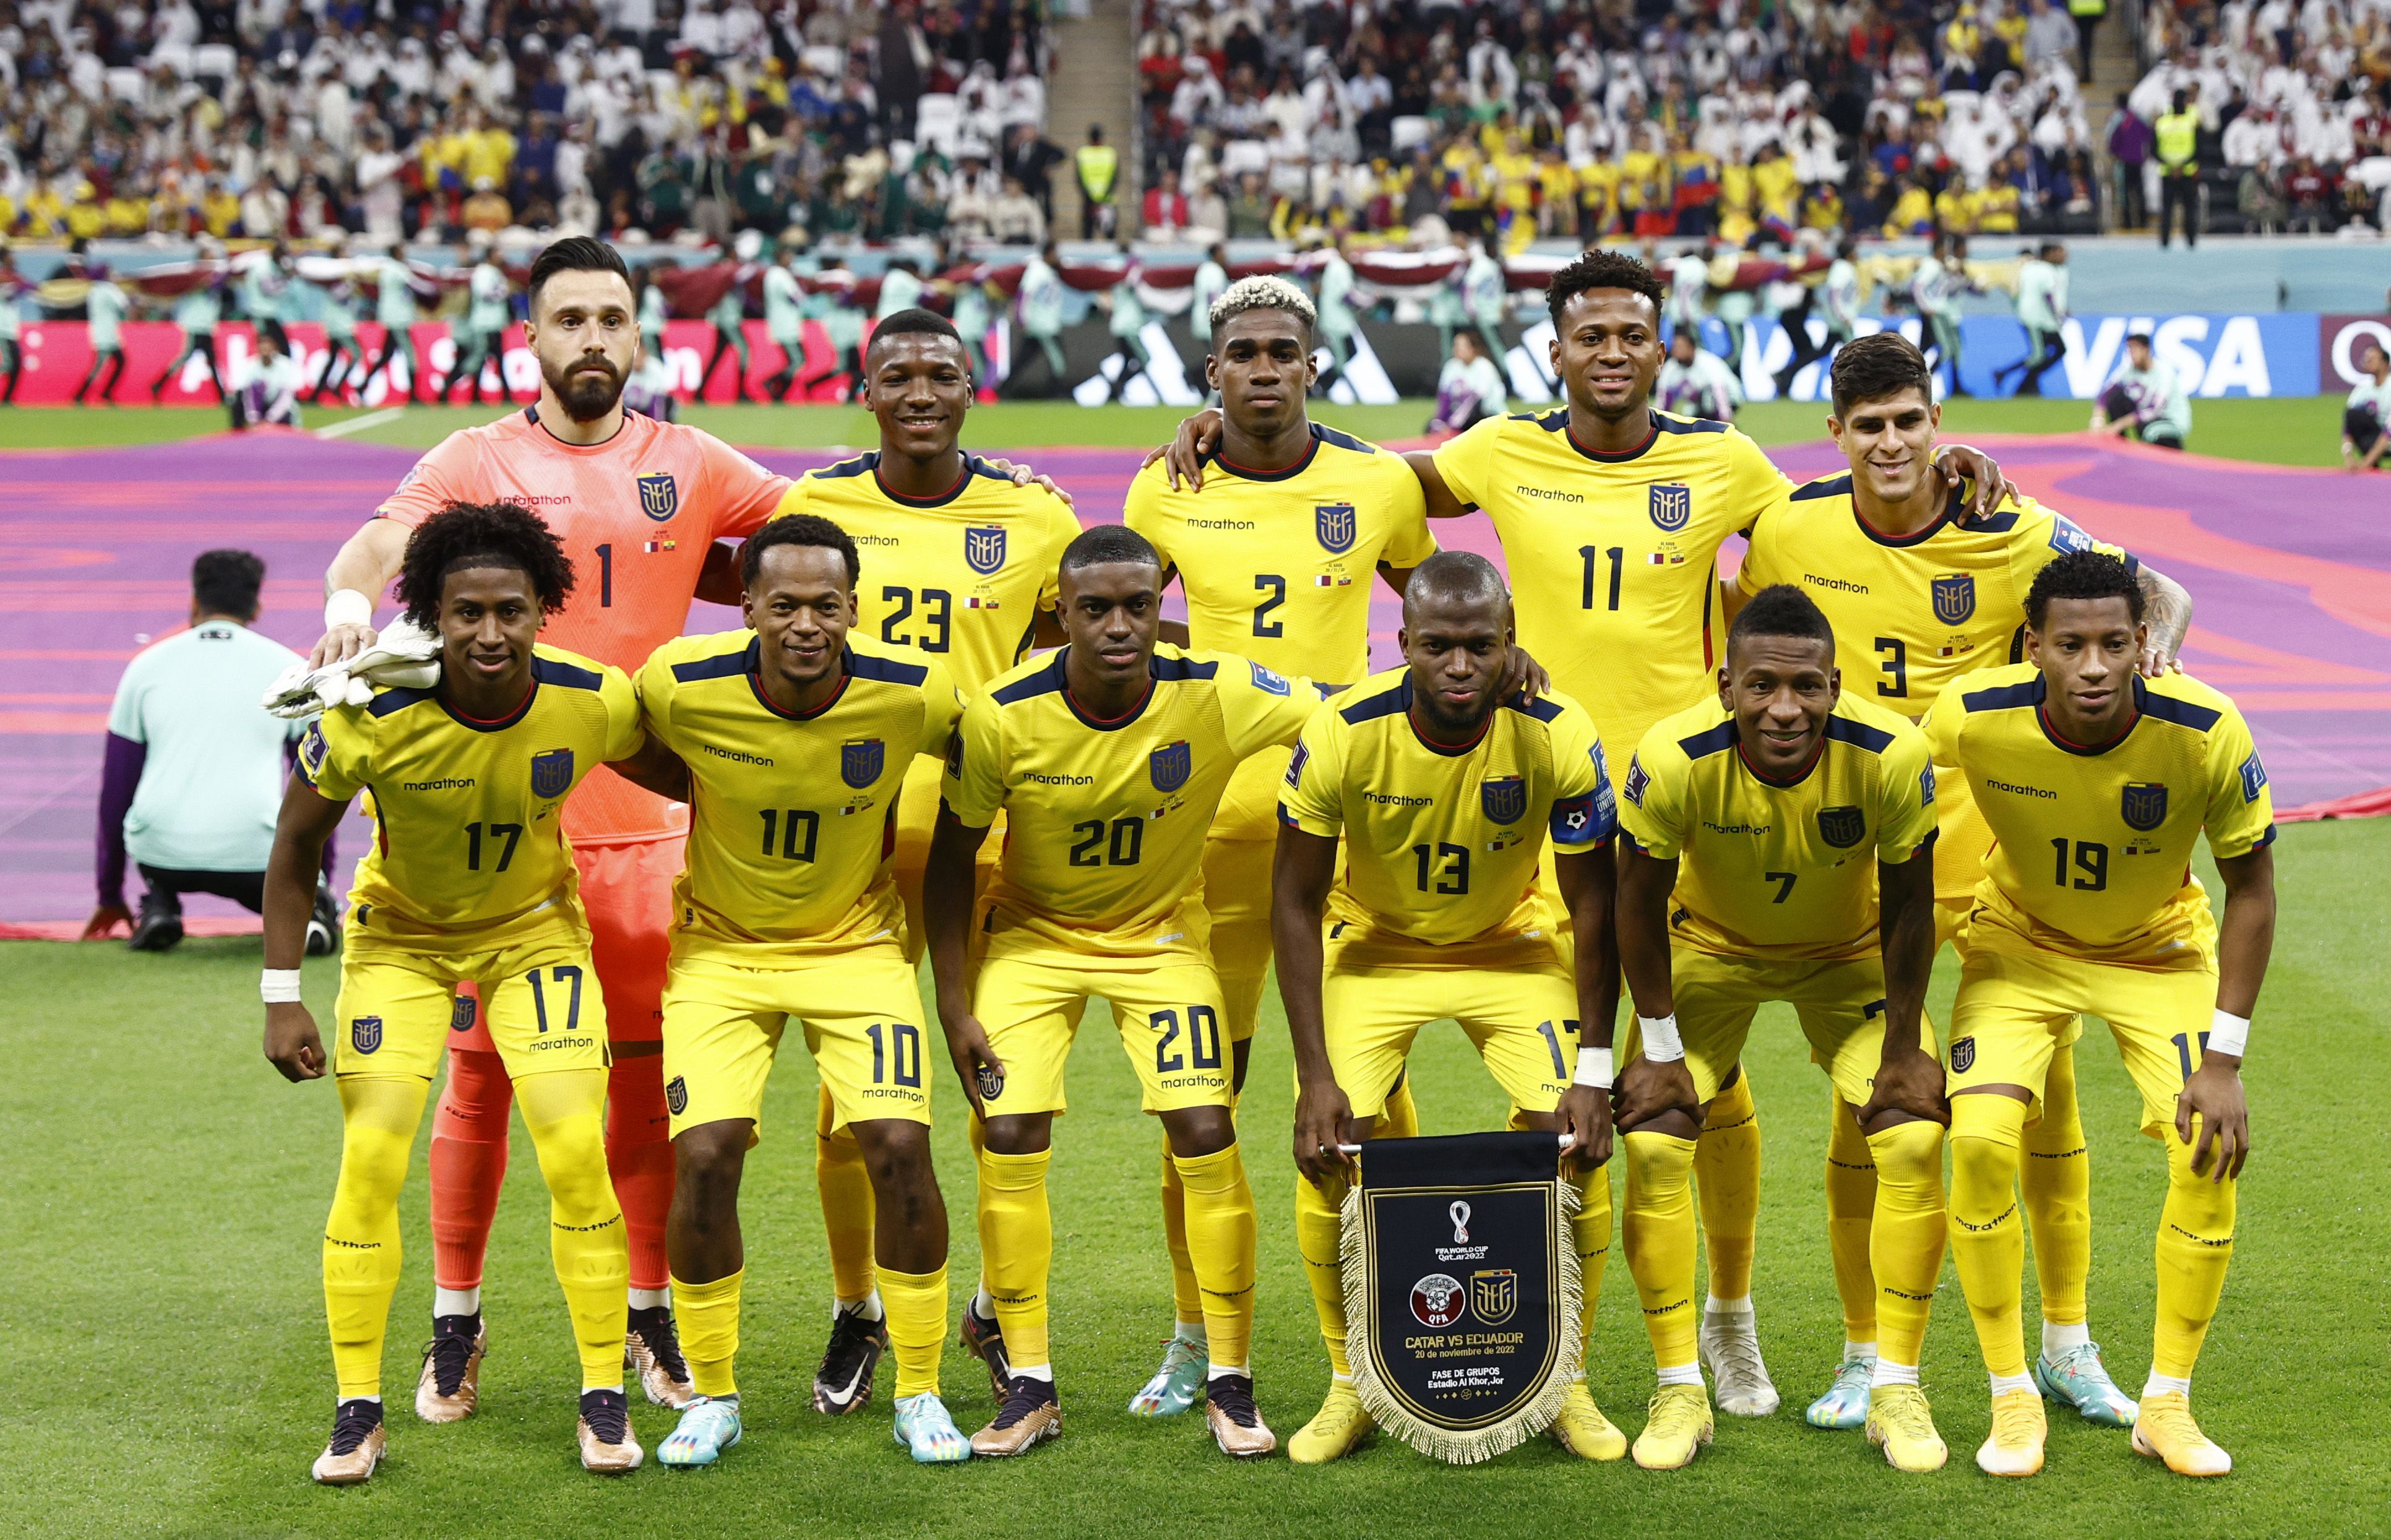 Ecuador equipo de futbol